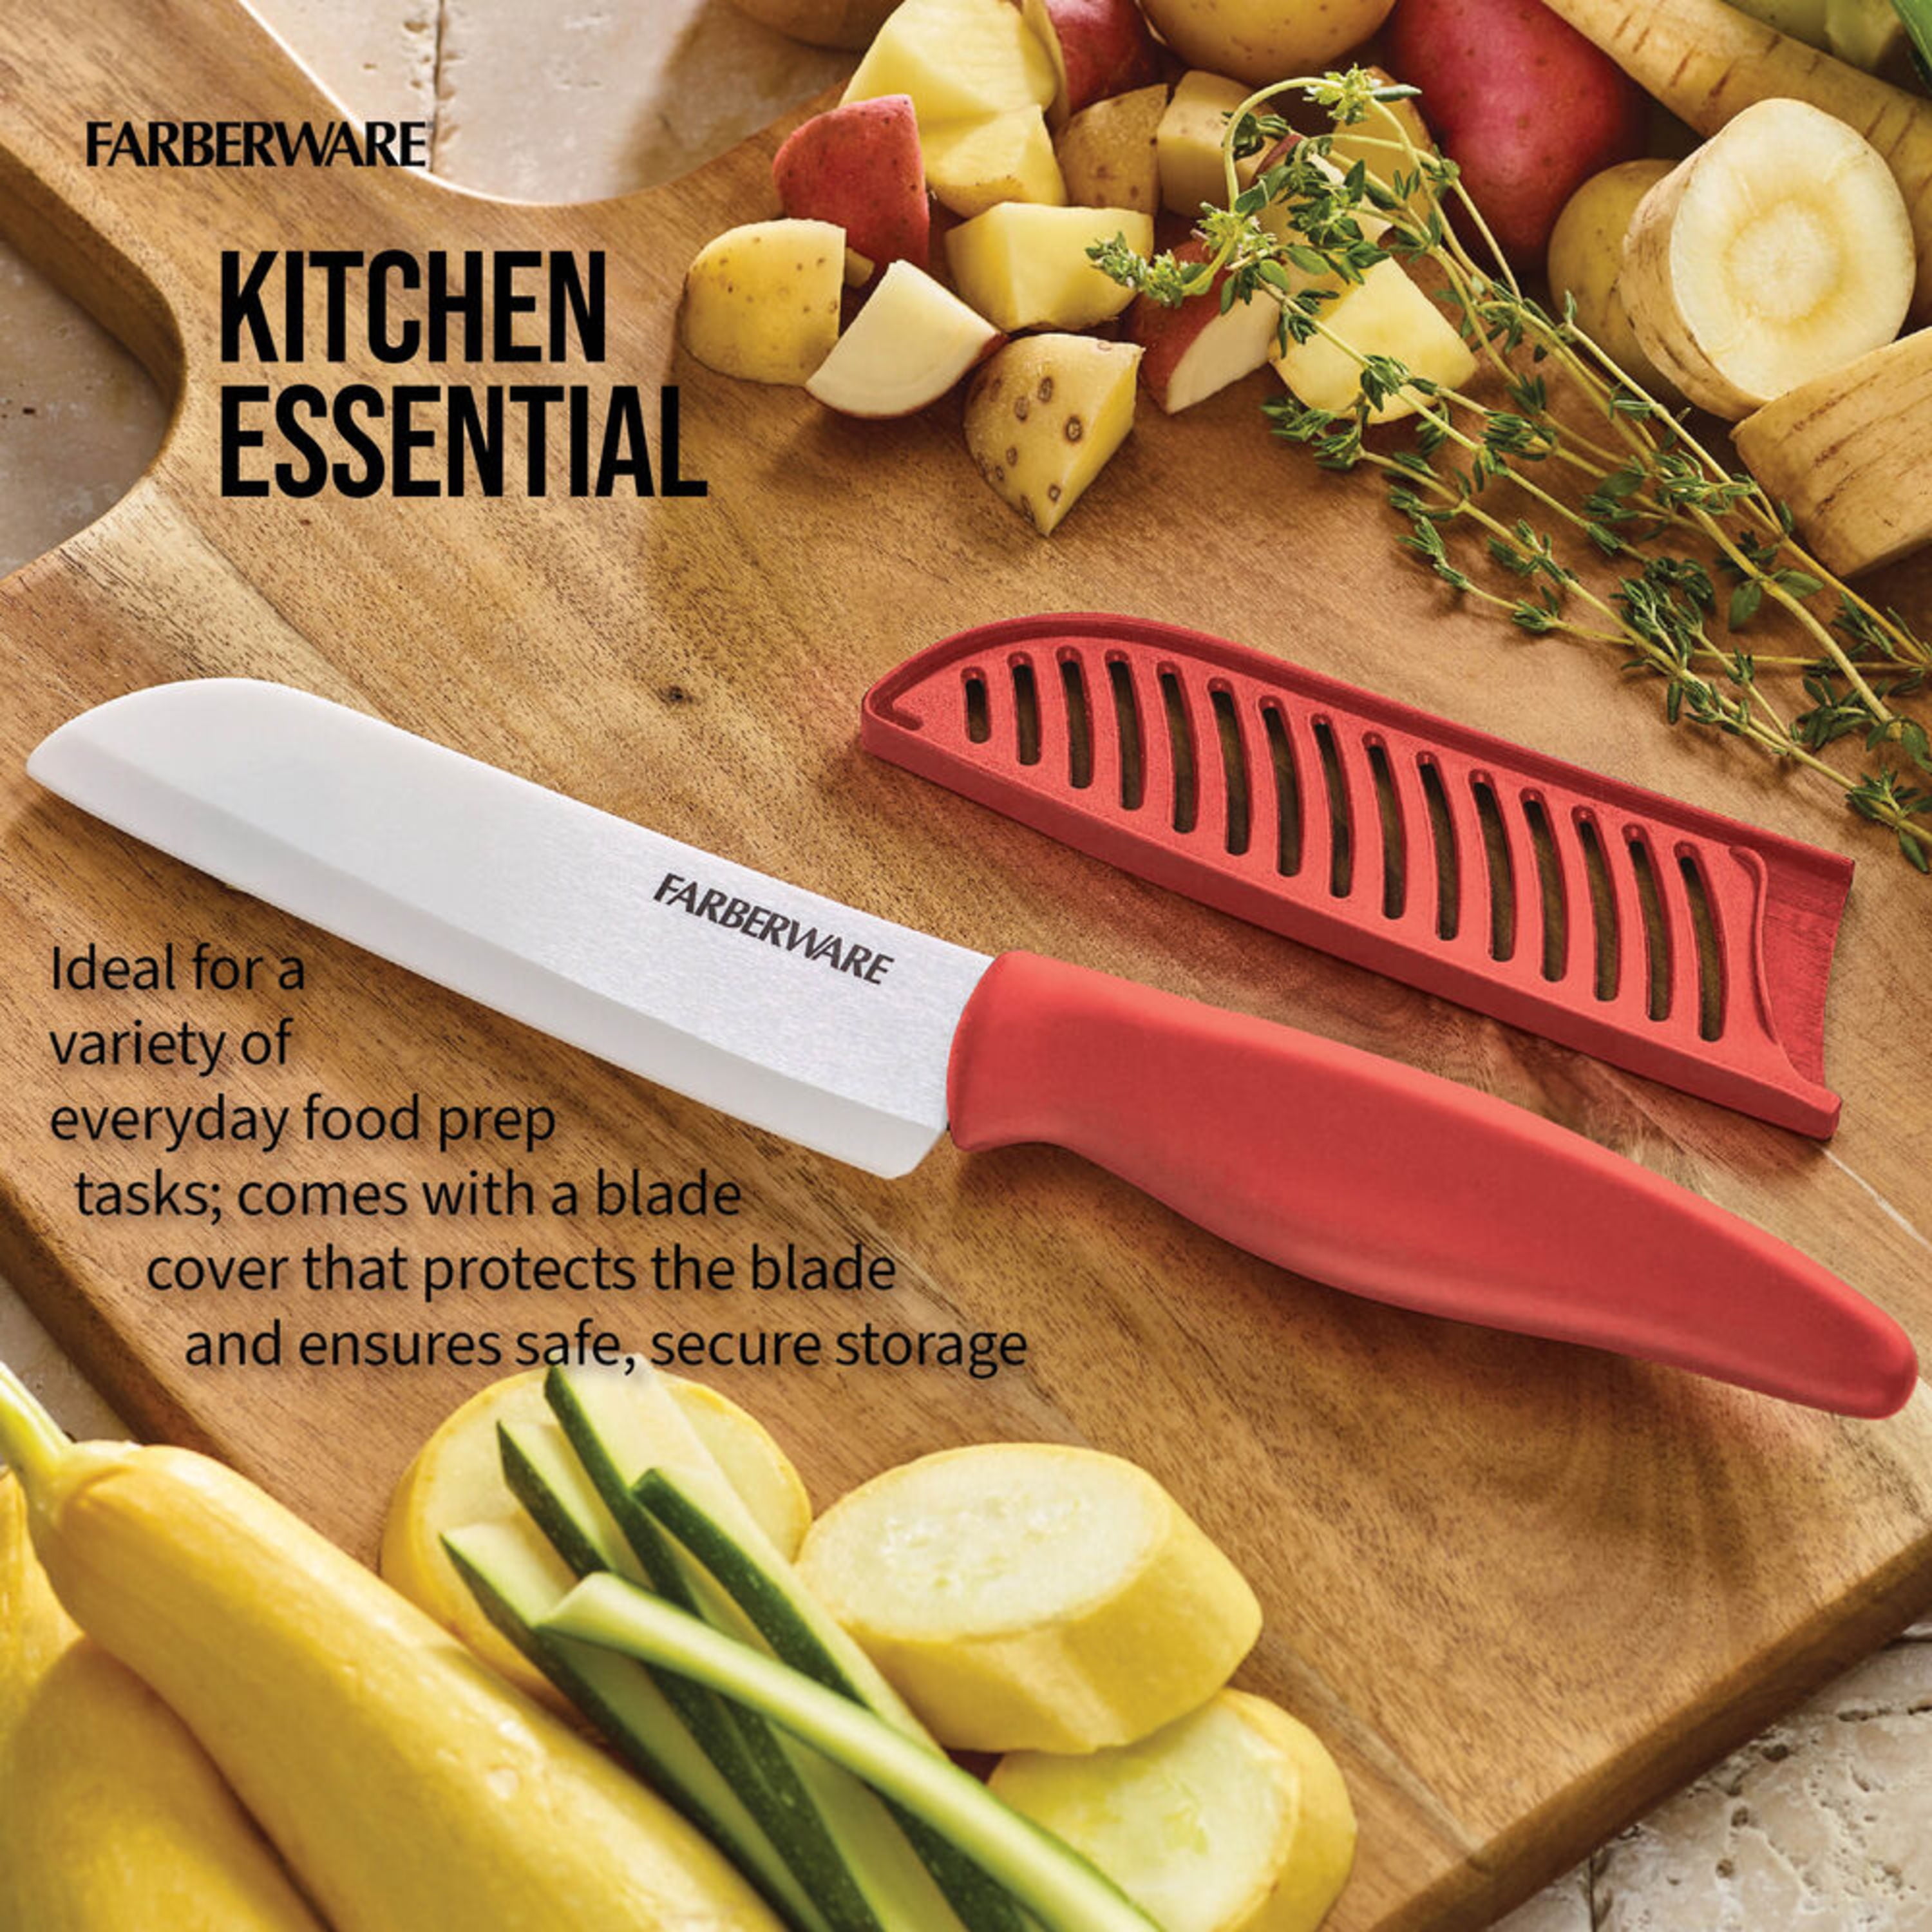 Farberware Ceramic 5-Inch Santoku Knife With Custom-Fit Blade Cover,  Razor-Sharp Kitchen Knife With Ergonomic, Soft-Grip Handle,  Dishwasher-Safe, 5-Inch, Aqua